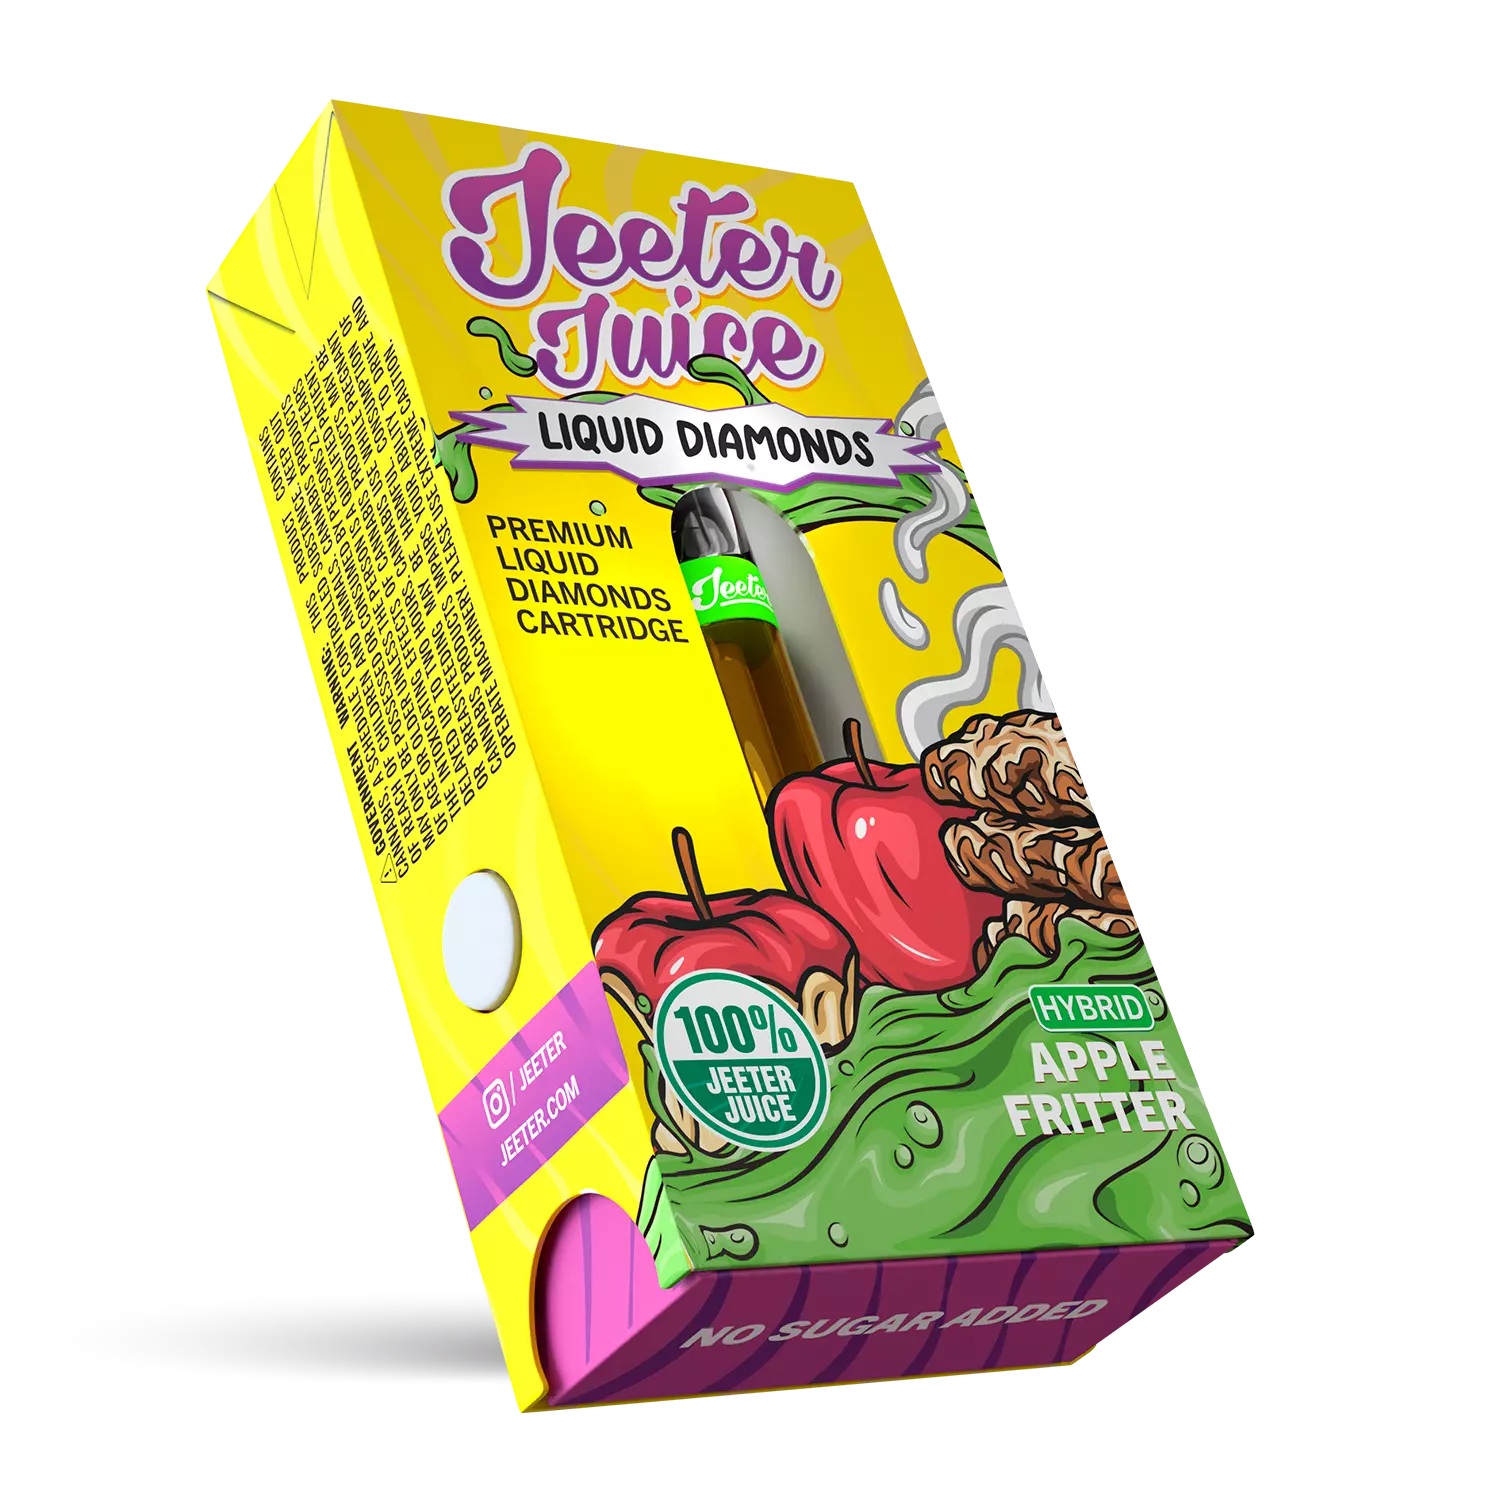 Jeeter Juice Premium 1 Gram Liquid Diamonds Vape - Apple Fritter - The Balloon Room